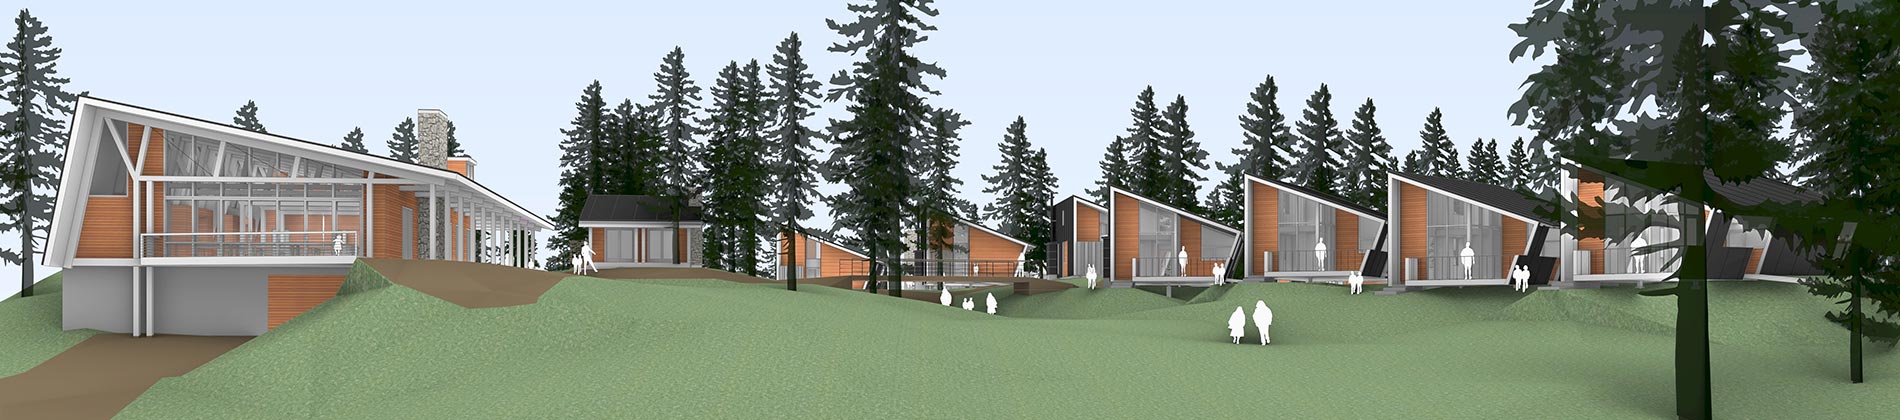 Camp Shawnigan Property Rendering